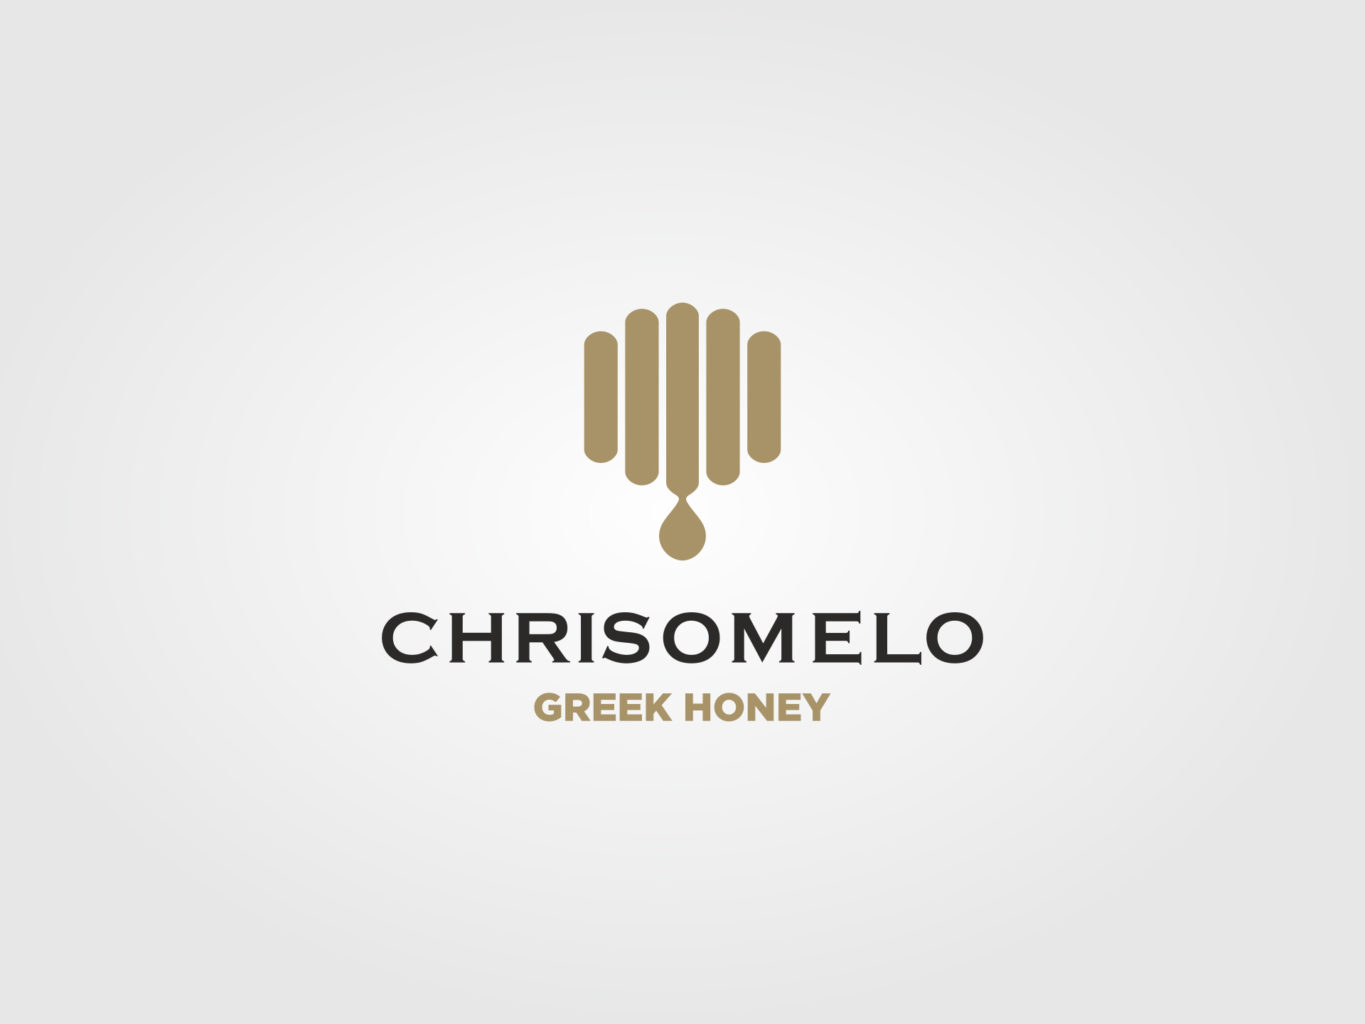 chrisomelo greek honey logo by fiftyeggz